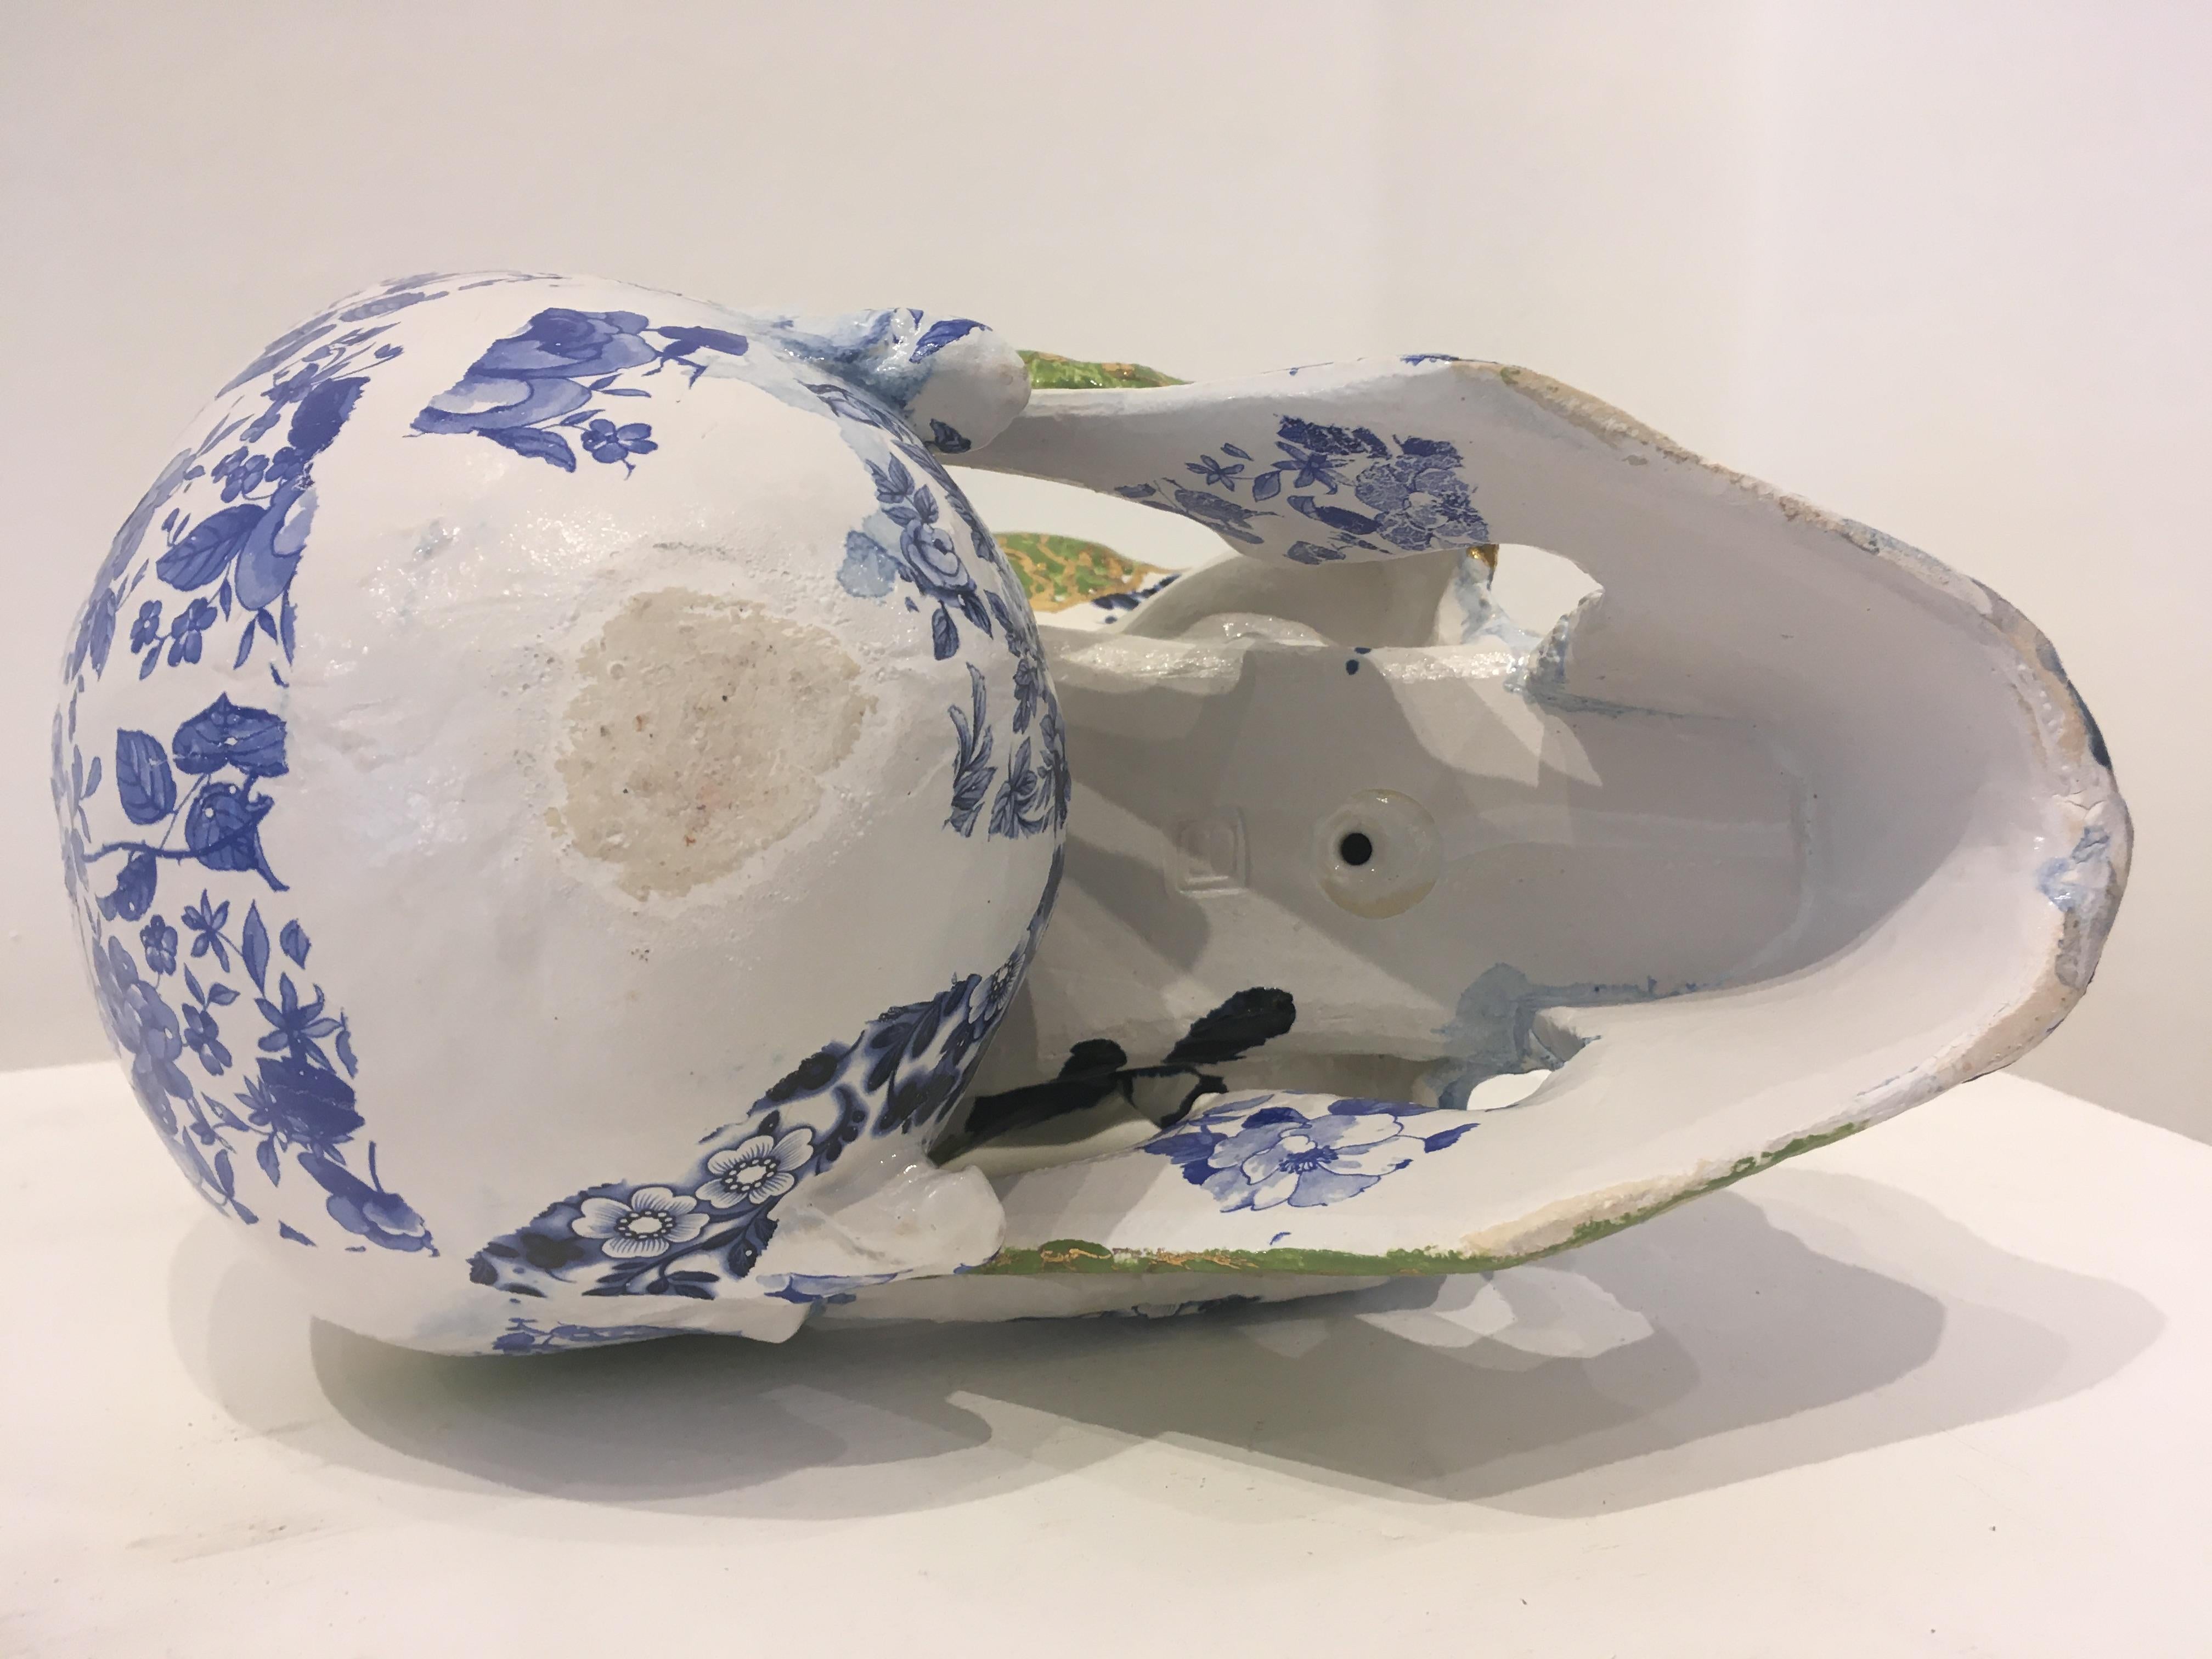 White Green and Blue Skull - contemporary ceramic sculpture 4